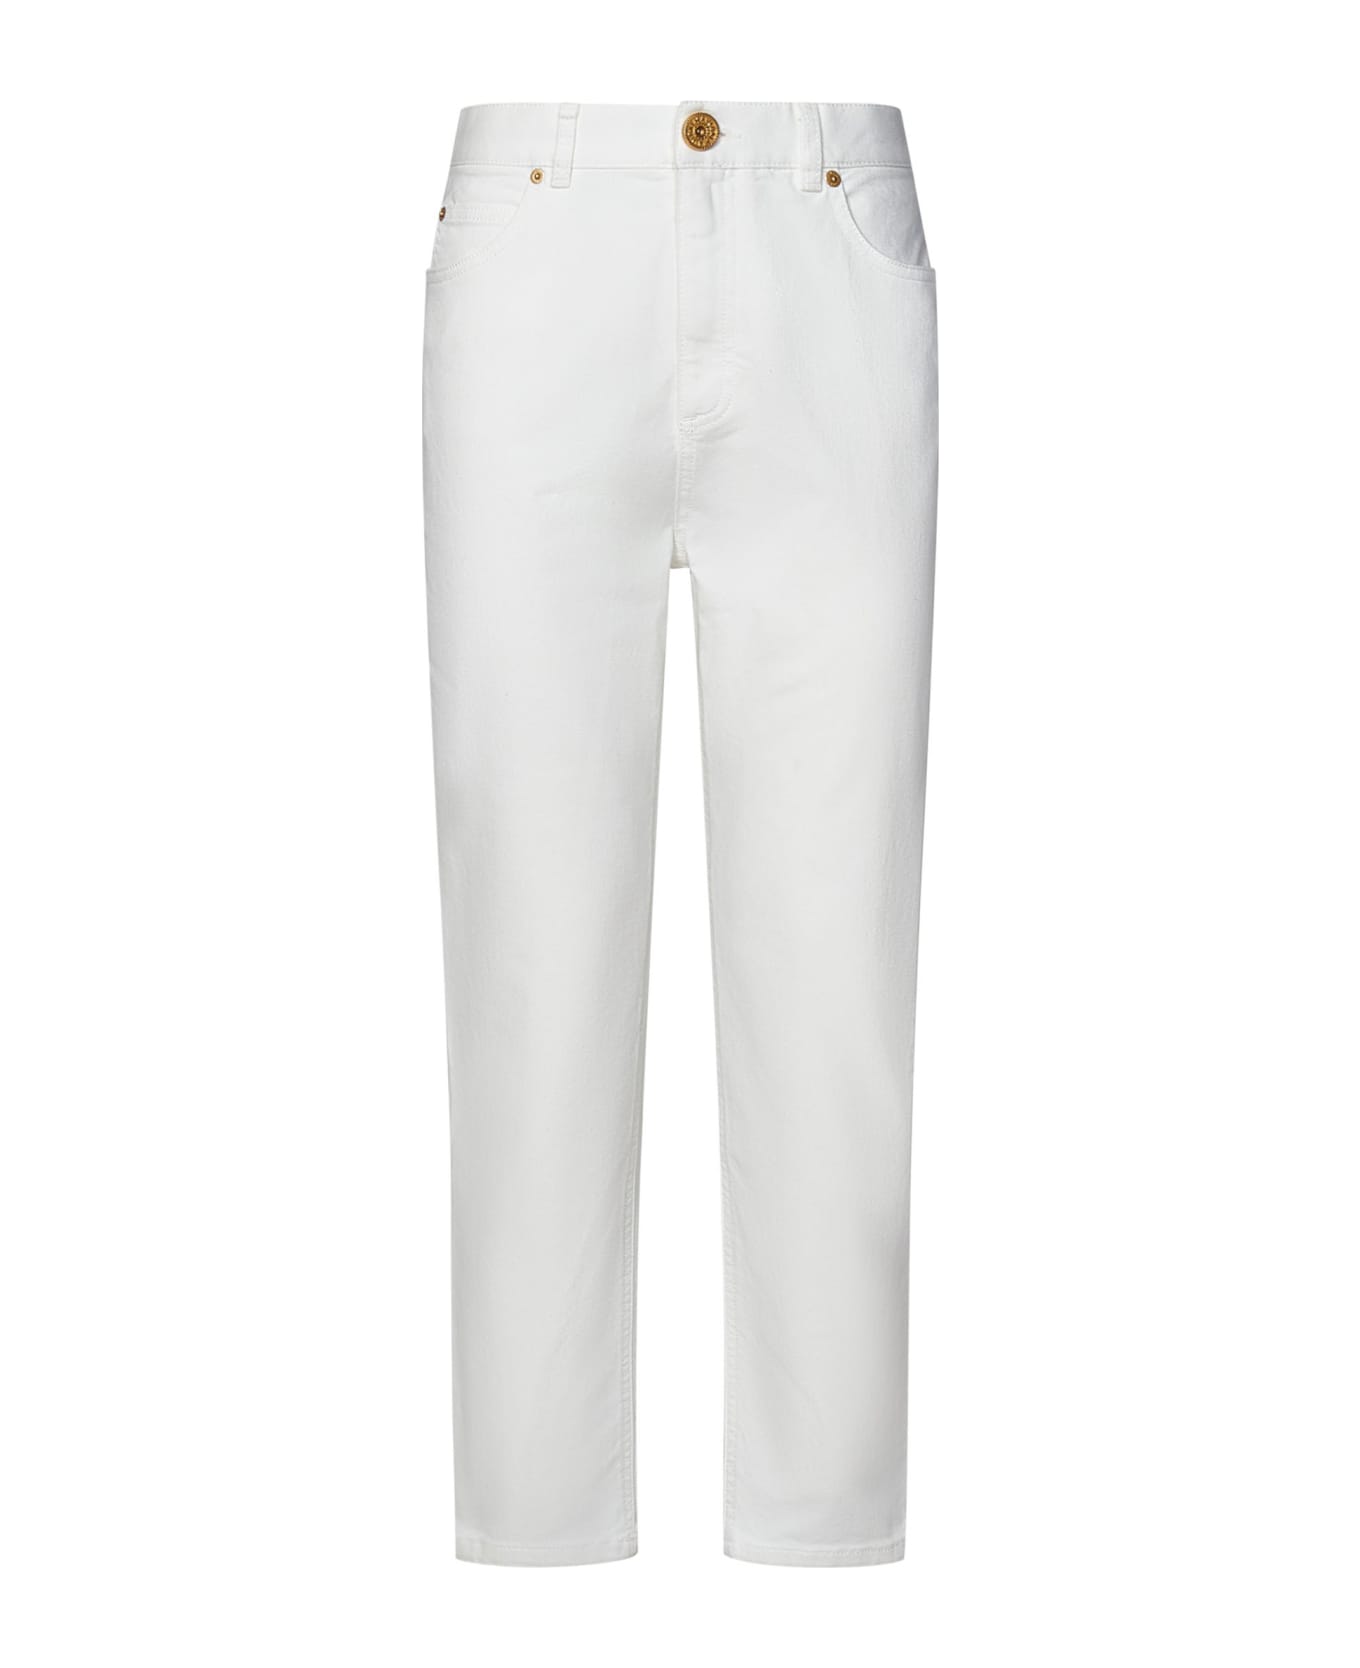 Balmain Paris Jeans - White